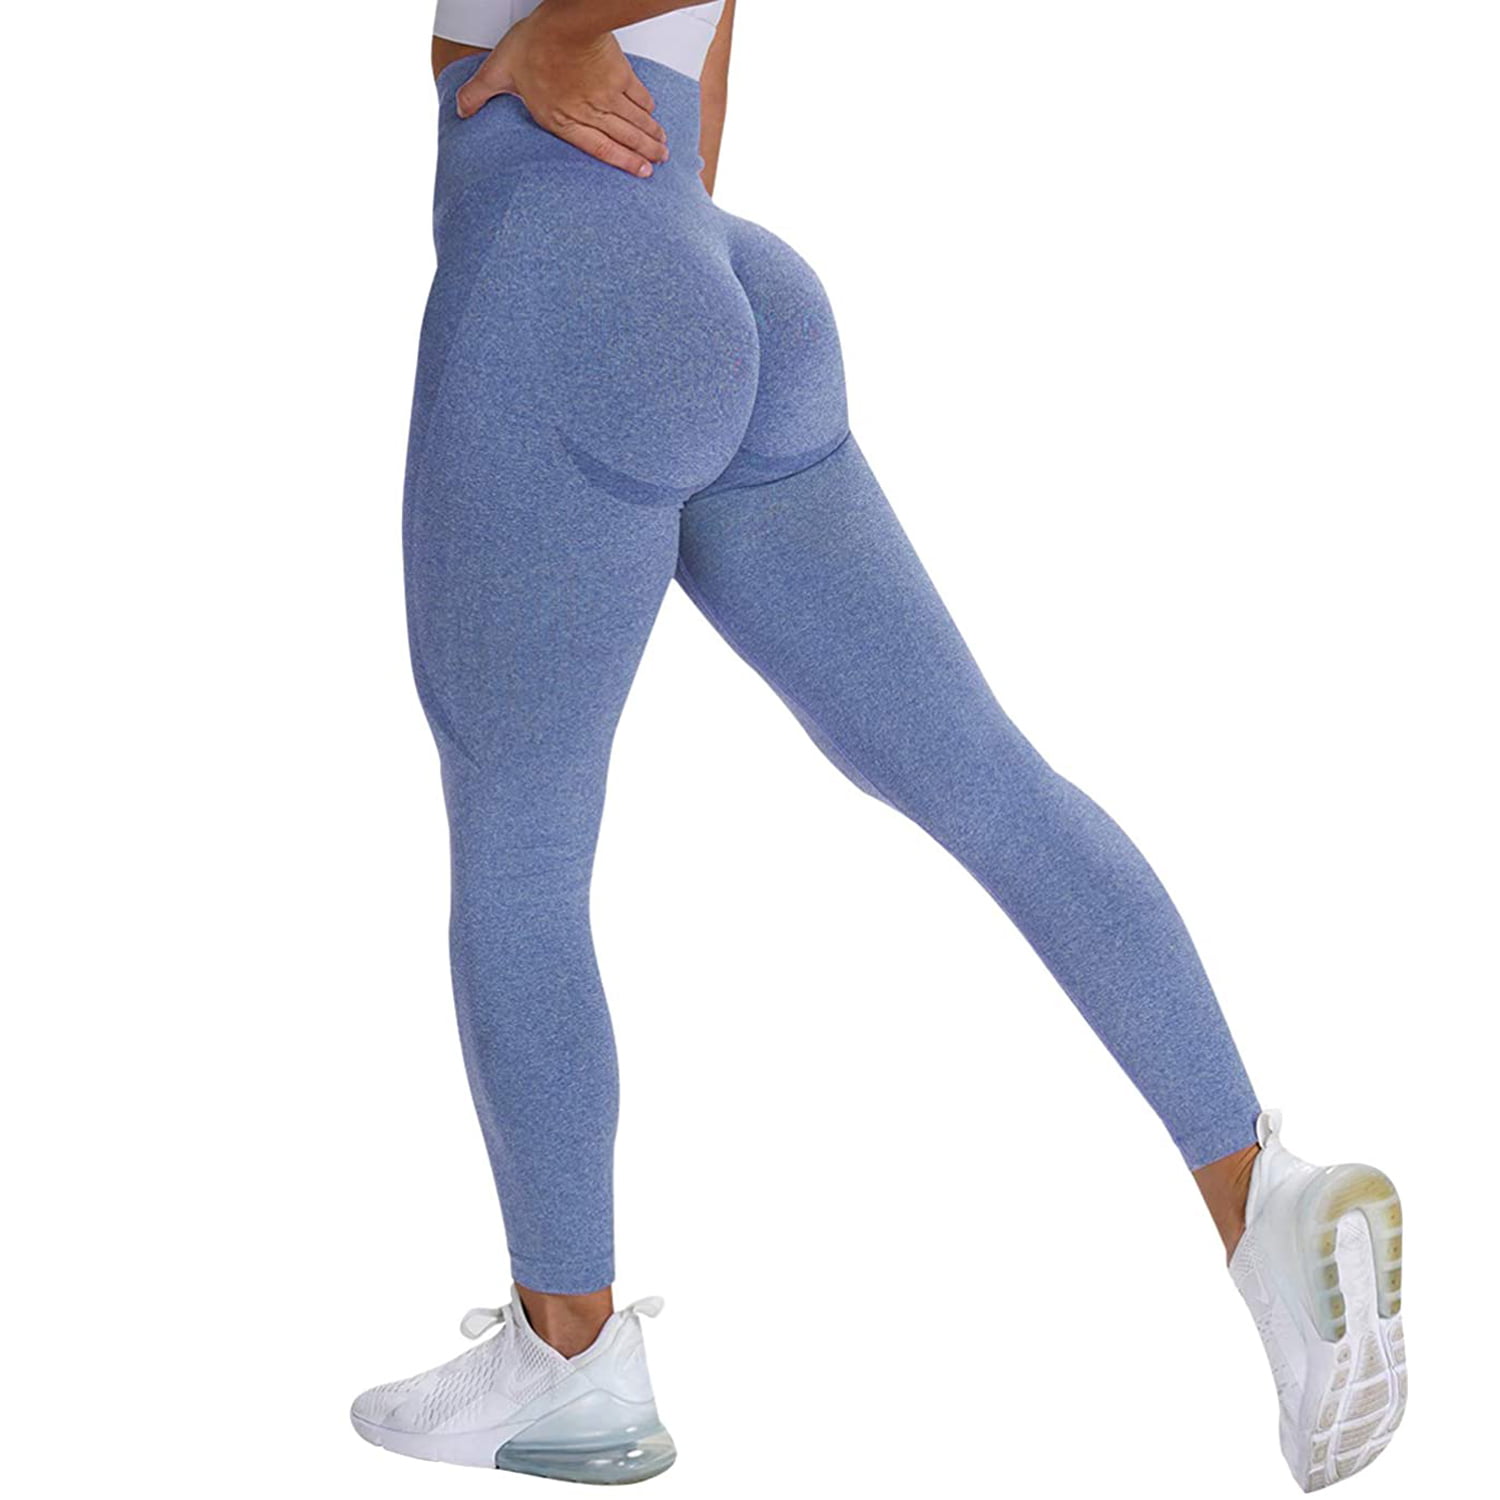 COMFREE Seamless Leggings Workout Gym Tights for Women High Waist